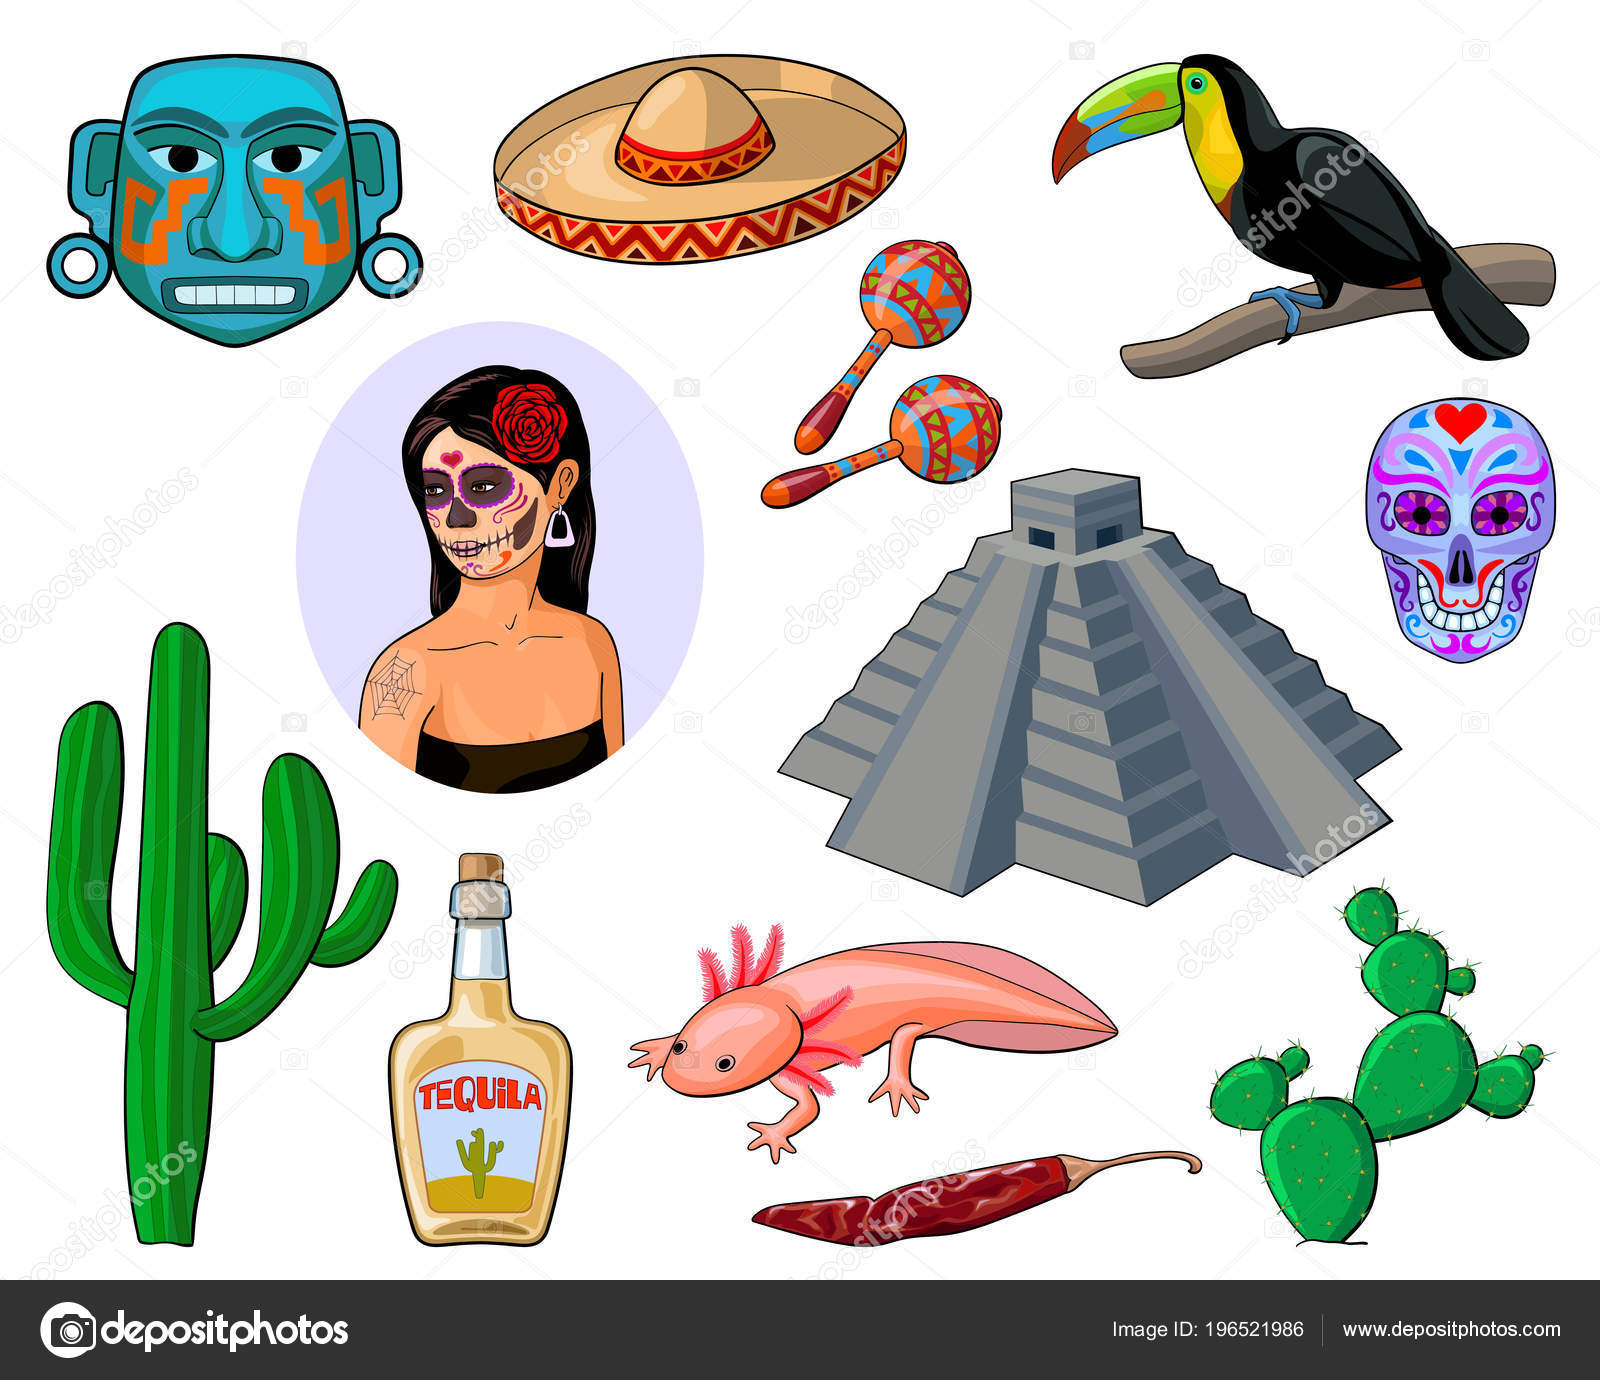 Objetos mexicanos imágenes de stock de arte vectorial | Depositphotos